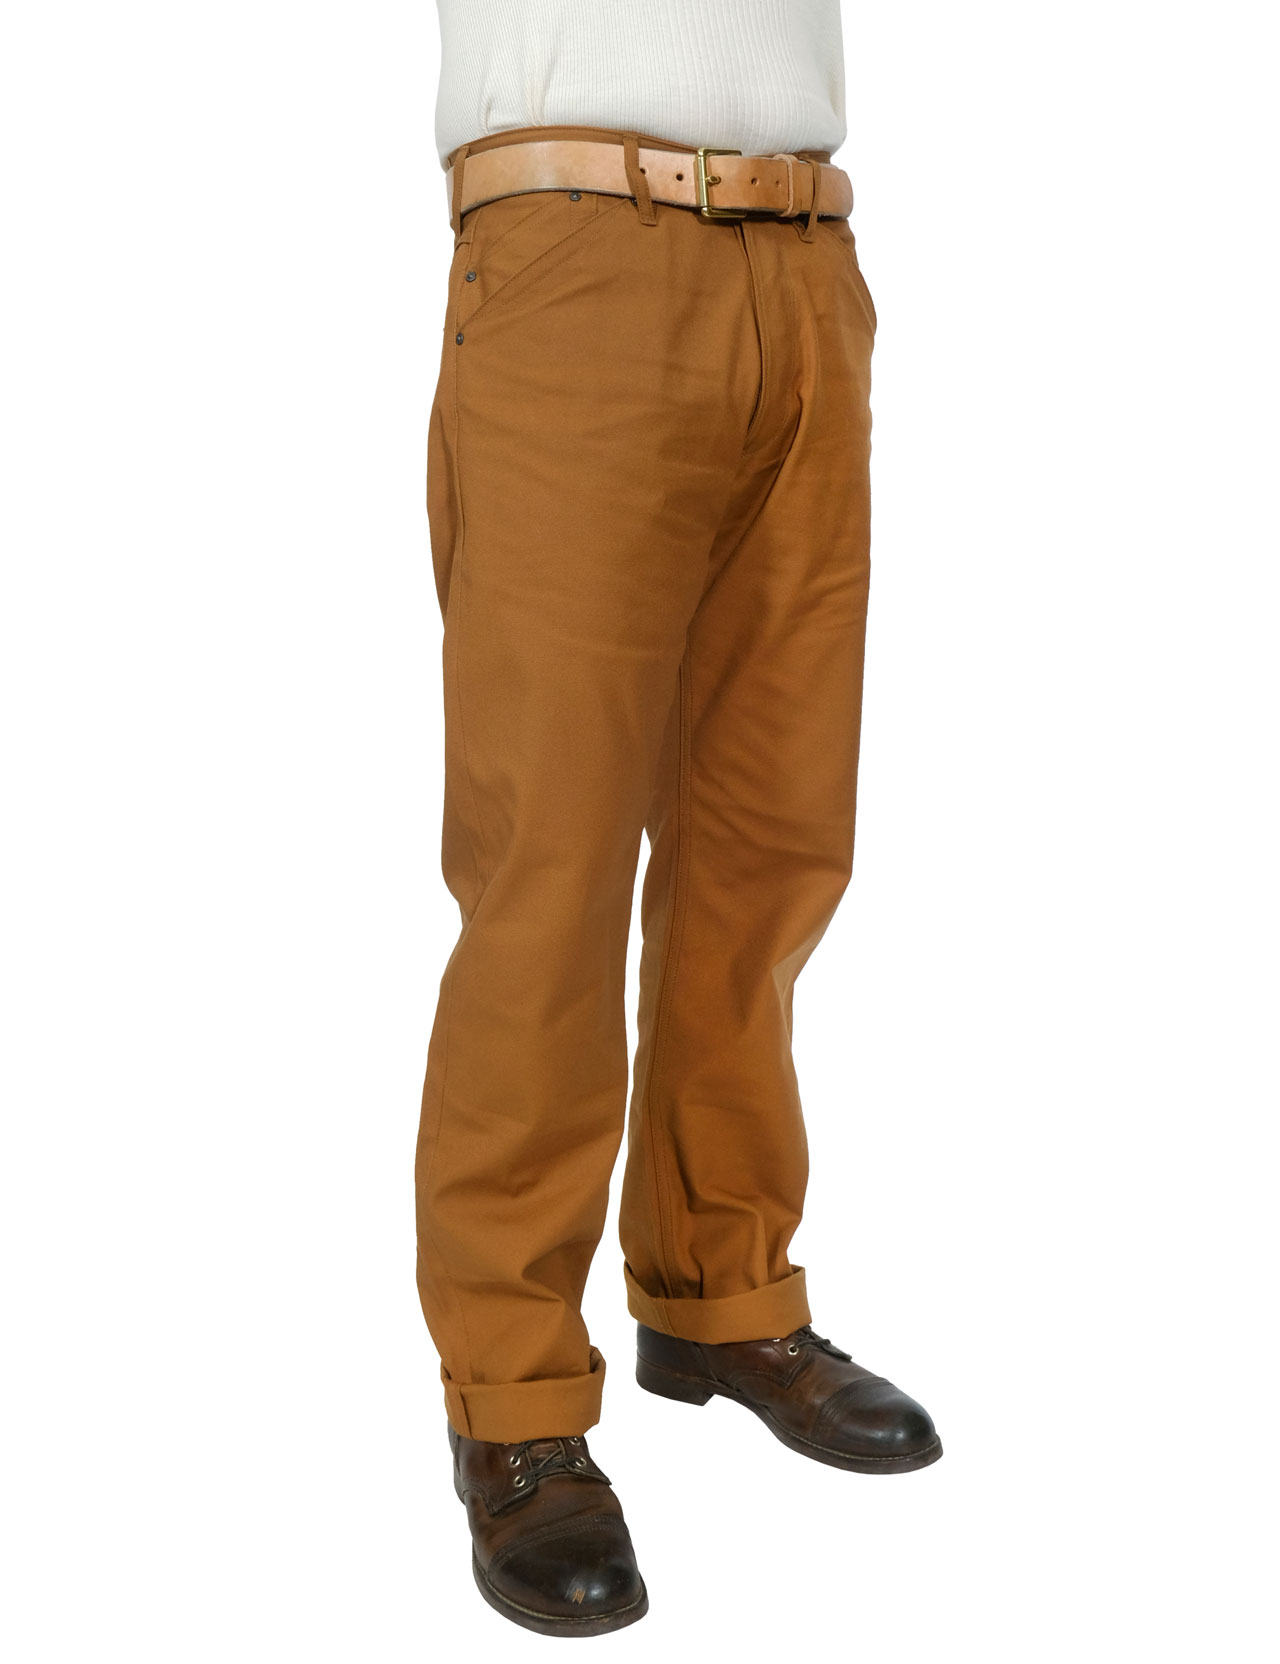  Stevenson Overall Co. - 280 Visalia Selvage Canvas Pants - Brown Duck